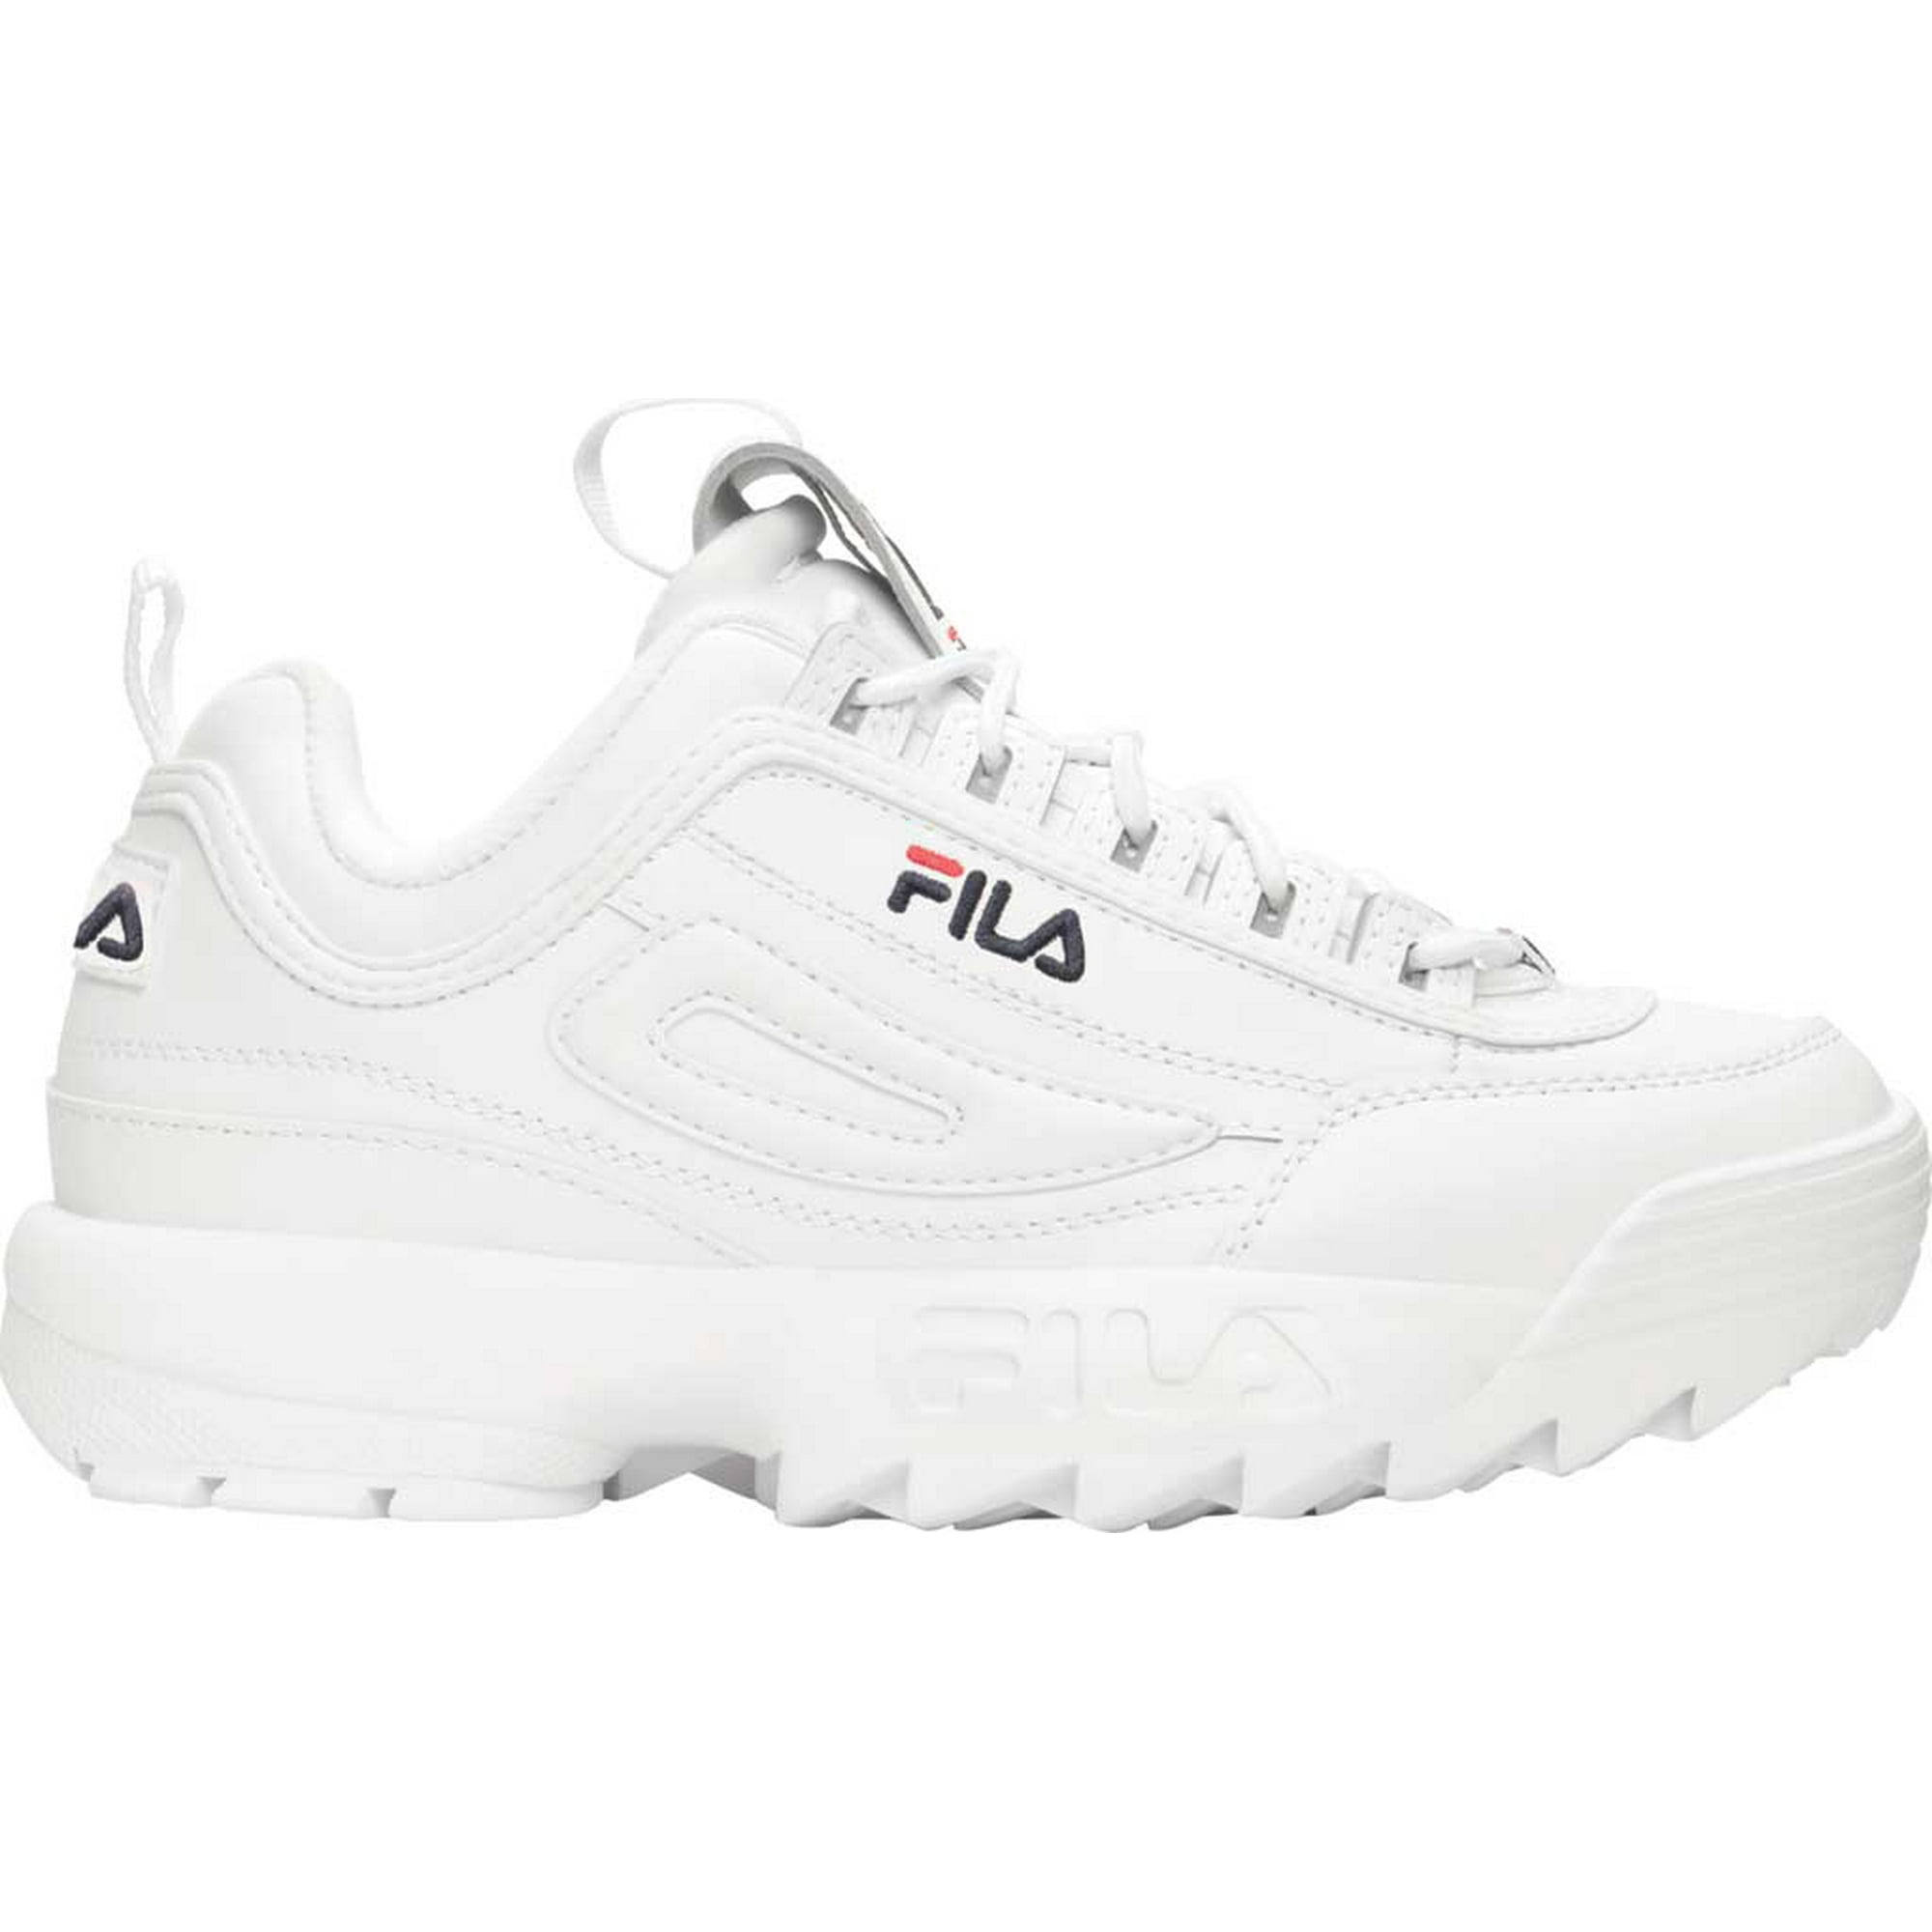 Women's Fila Disruptor II Premium Sneaker White/Navy/Red 9 M -